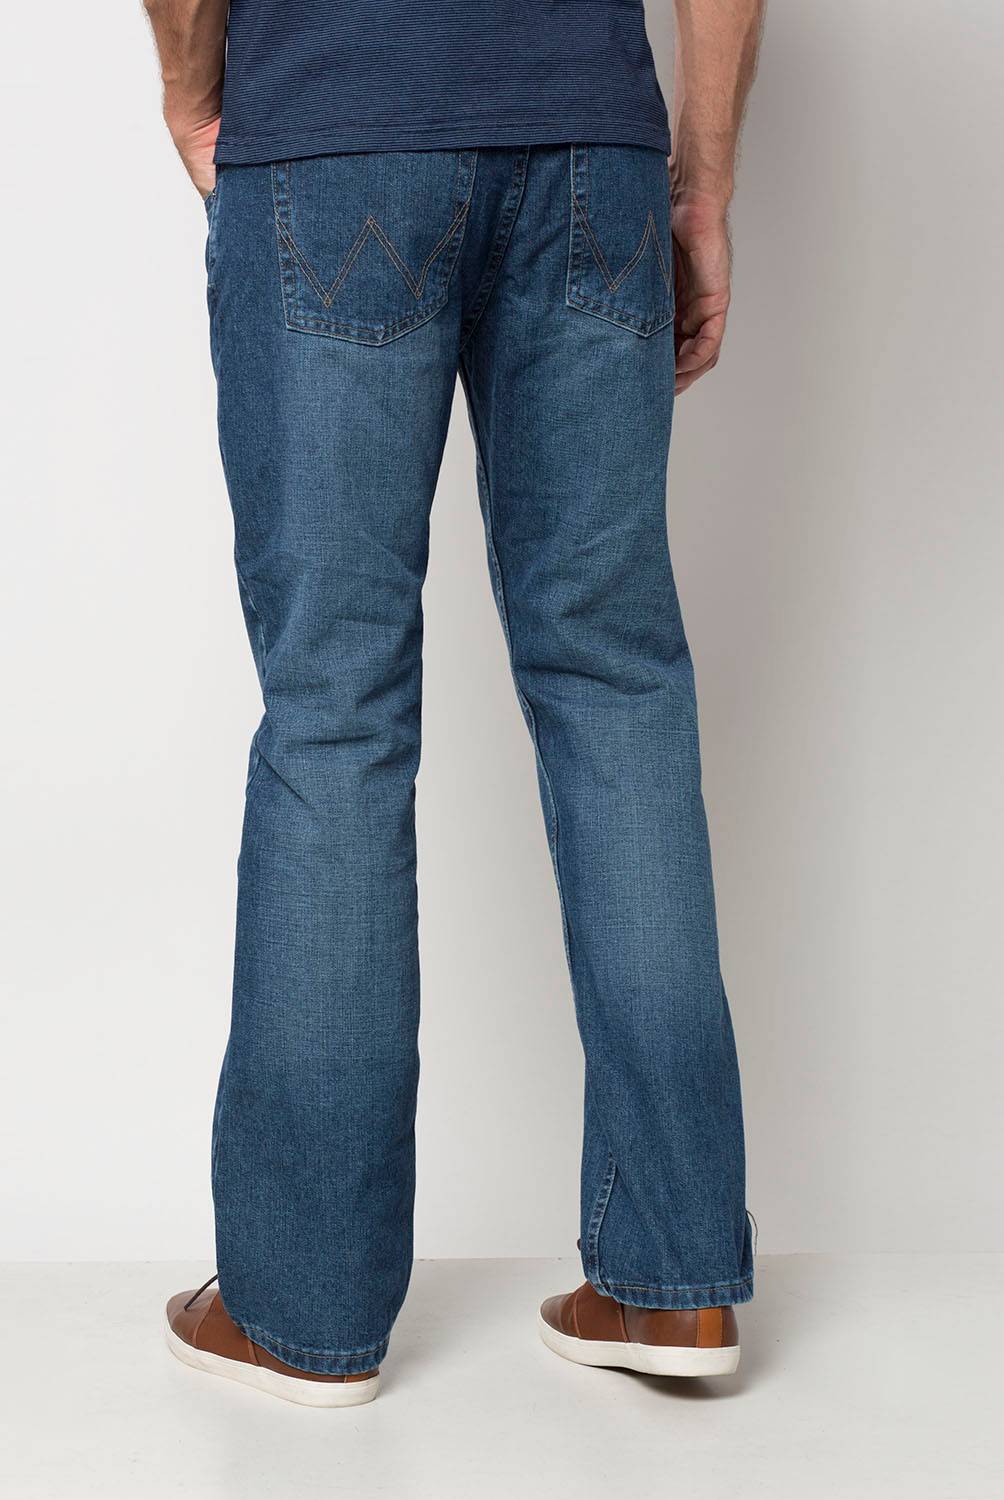 WRANGLER - Jeans Tampa Regular Fit